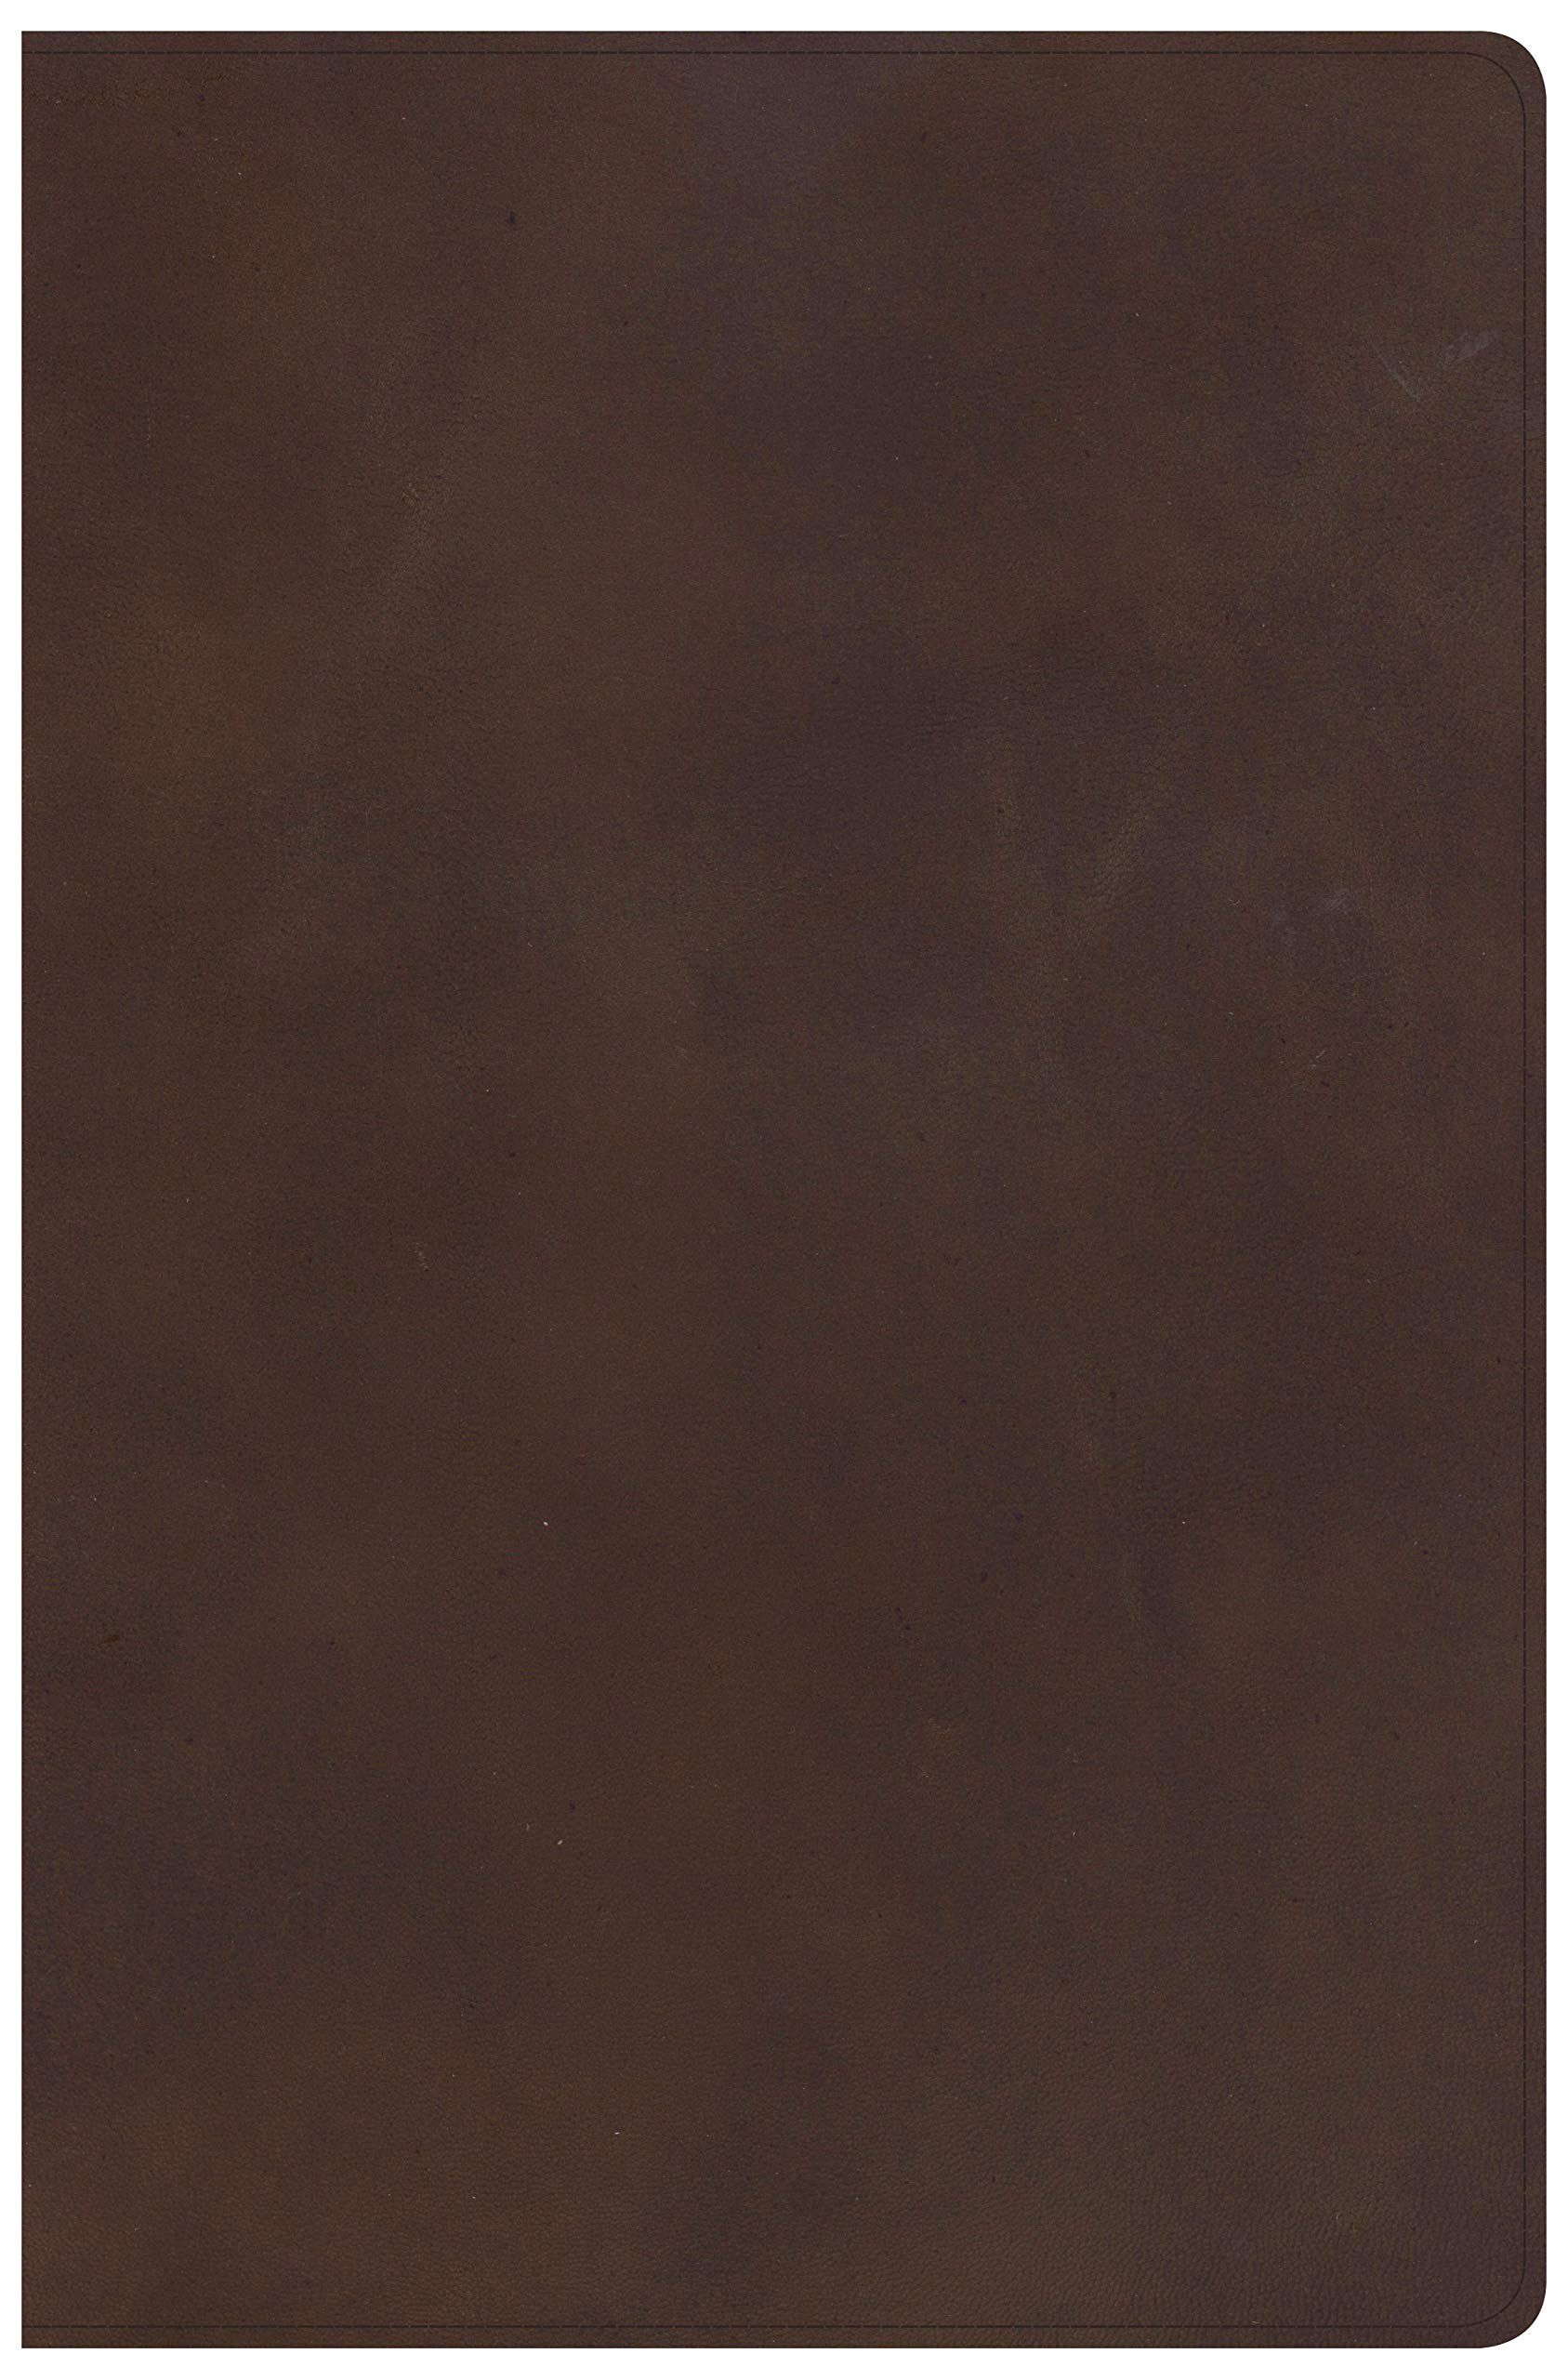 KJV Super Giant Print Reference Bible, Brown Genuine Leather